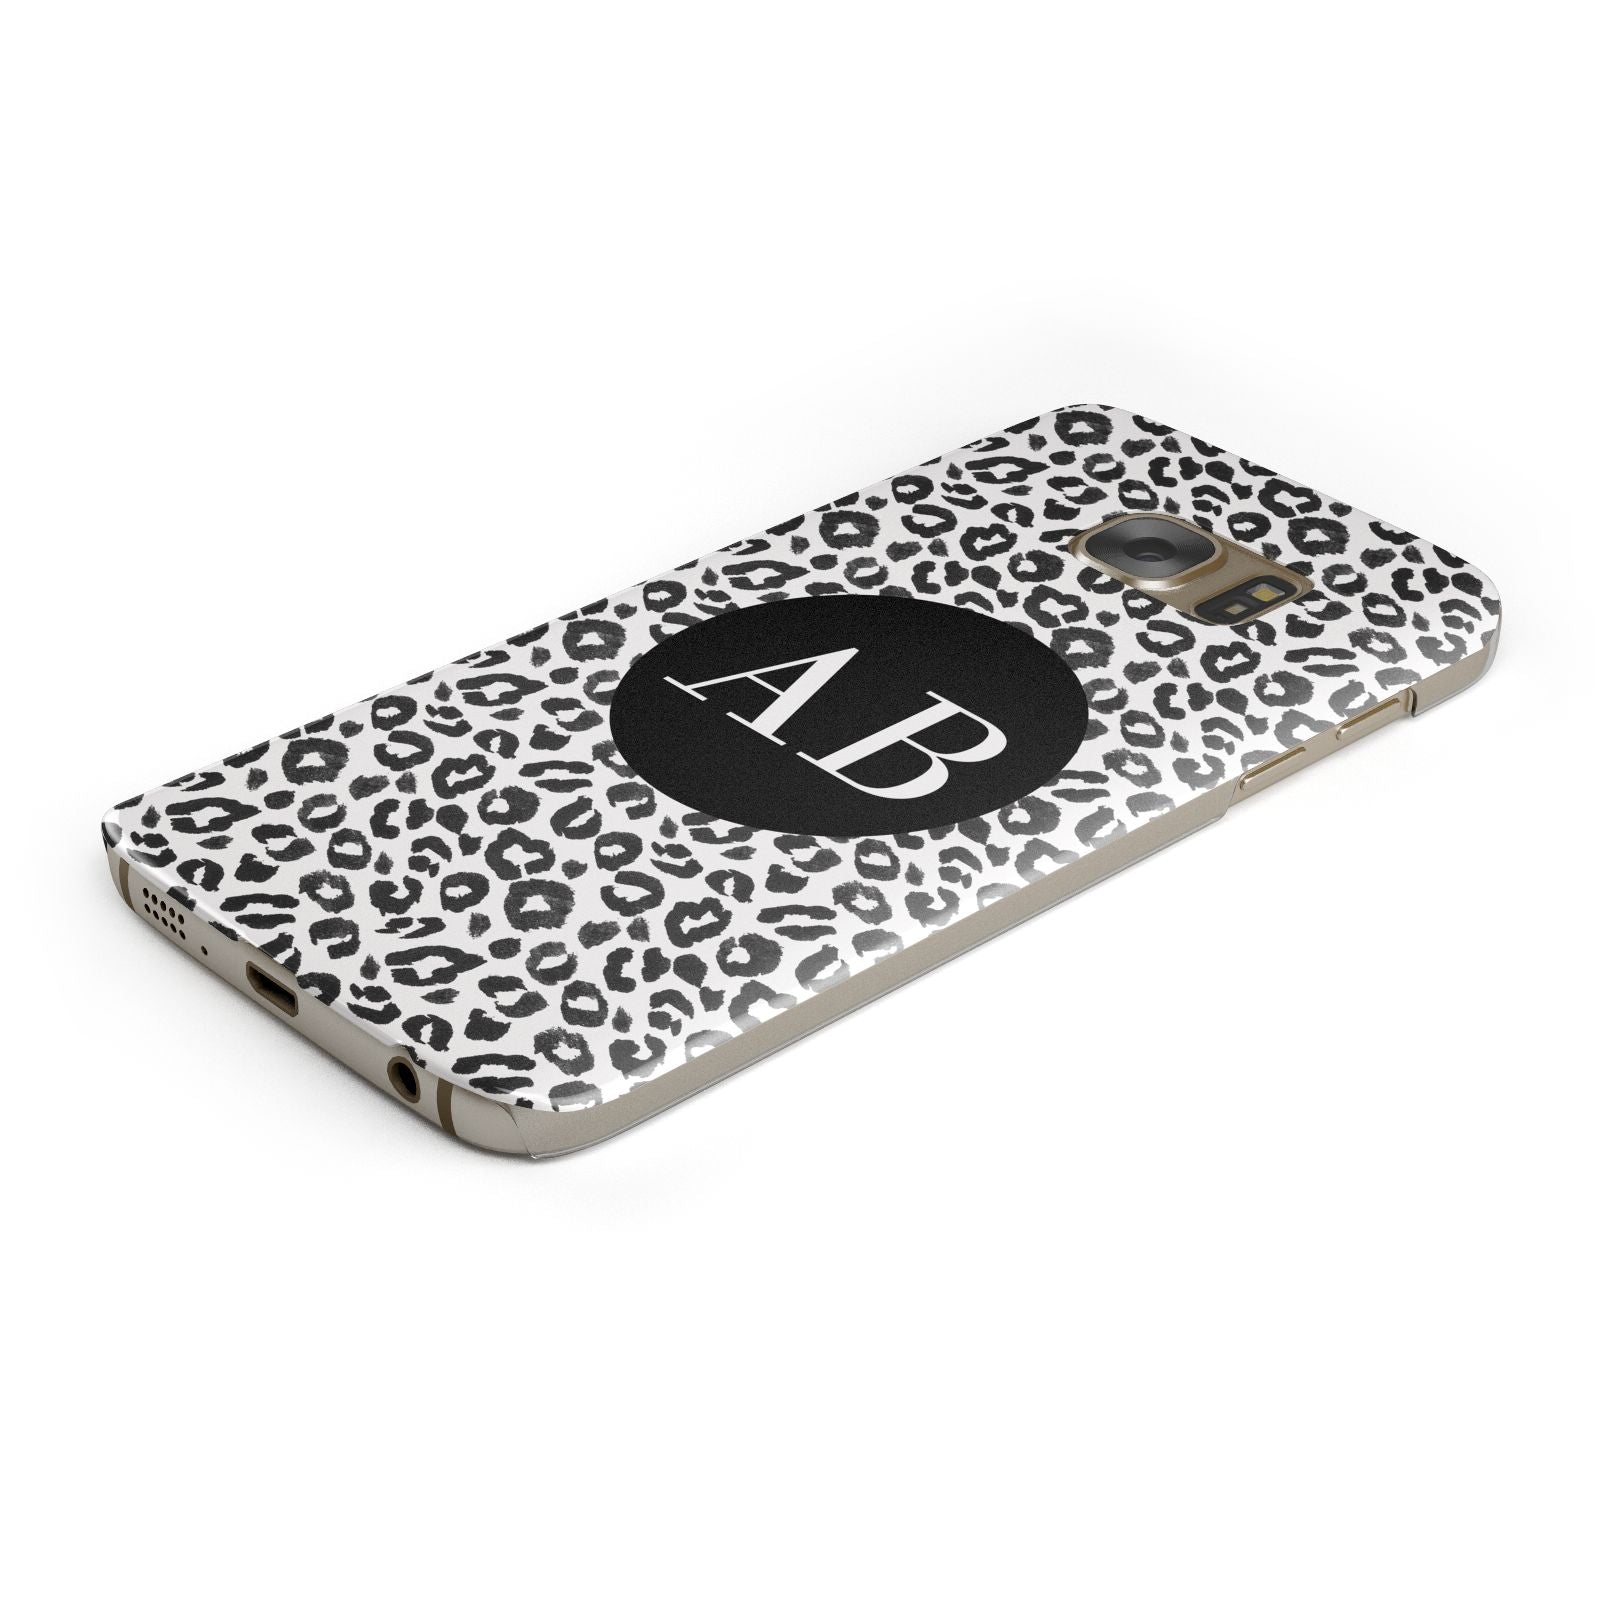 Leopard Print Black and White Samsung Galaxy Case Bottom Cutout